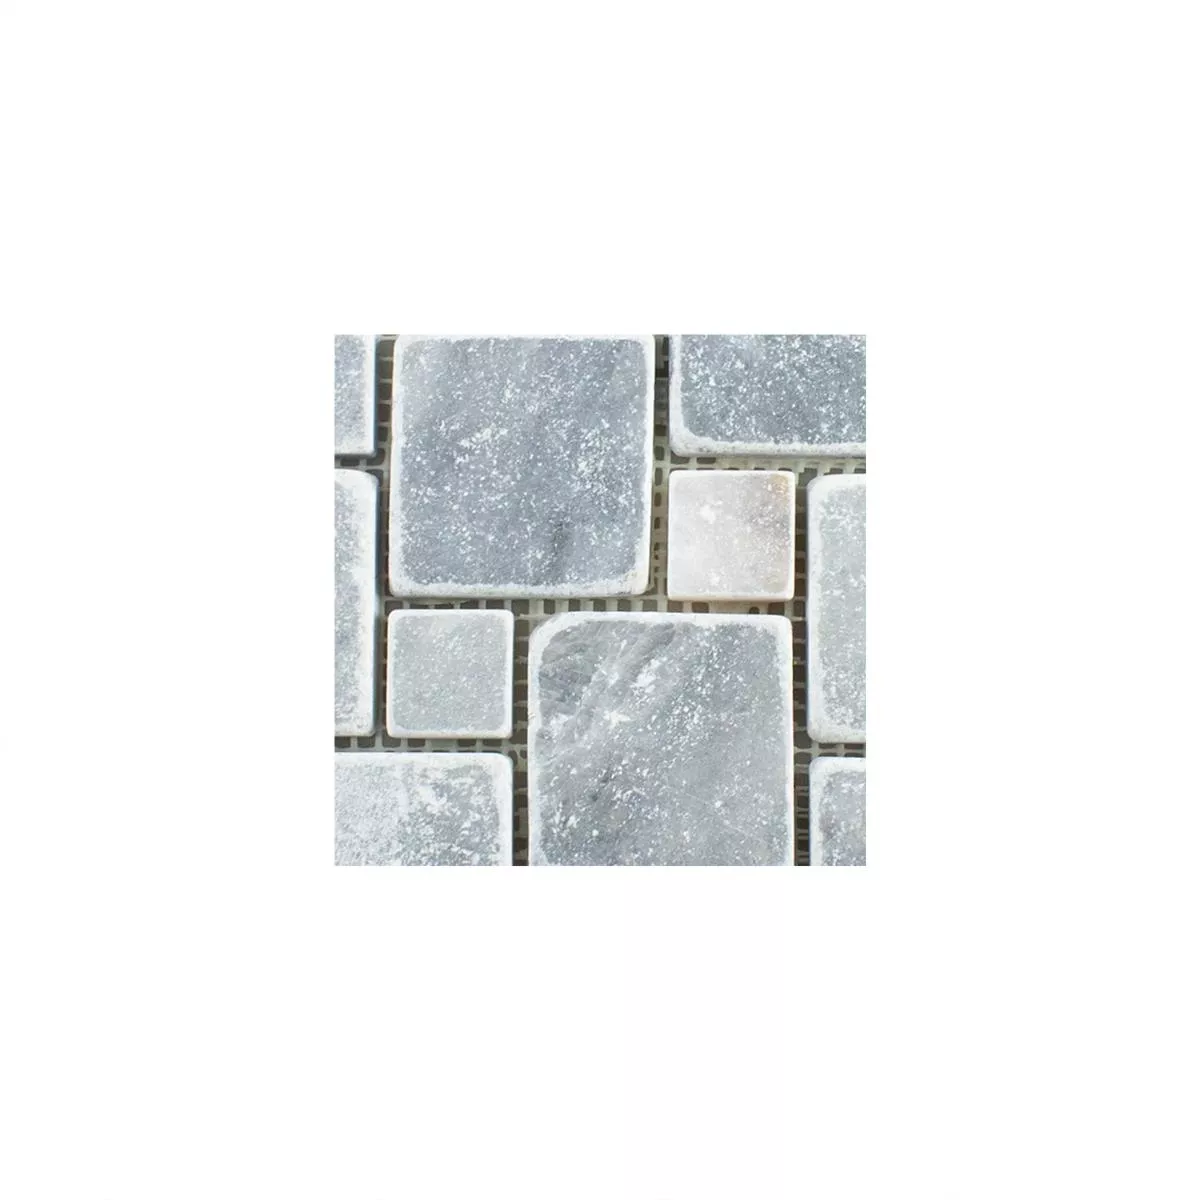 Sample Natural Stone Marble Mosaic Tiles Kilkenny Light Grey